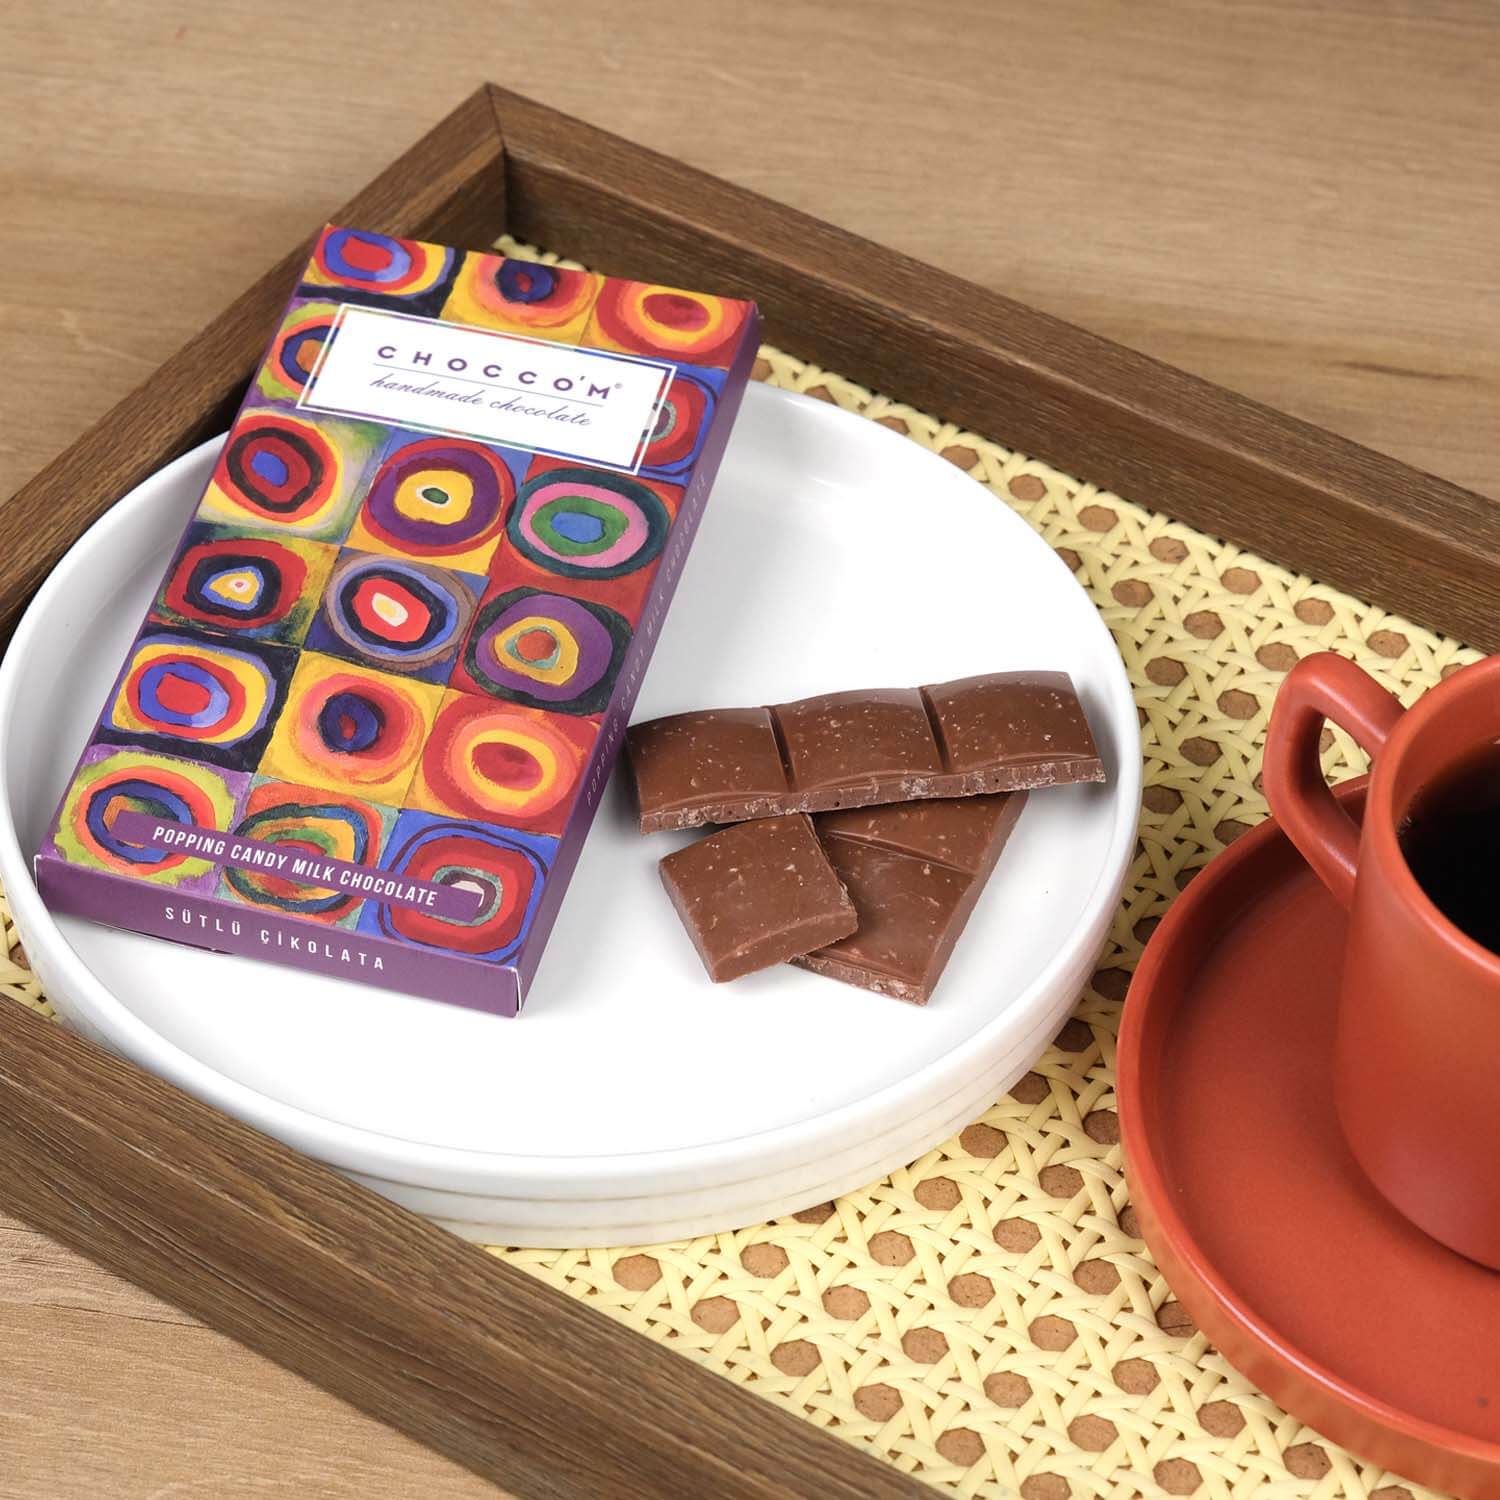 CHOCCO’M El Yapımı Patlayan Şekerli Sütlü Çikolata